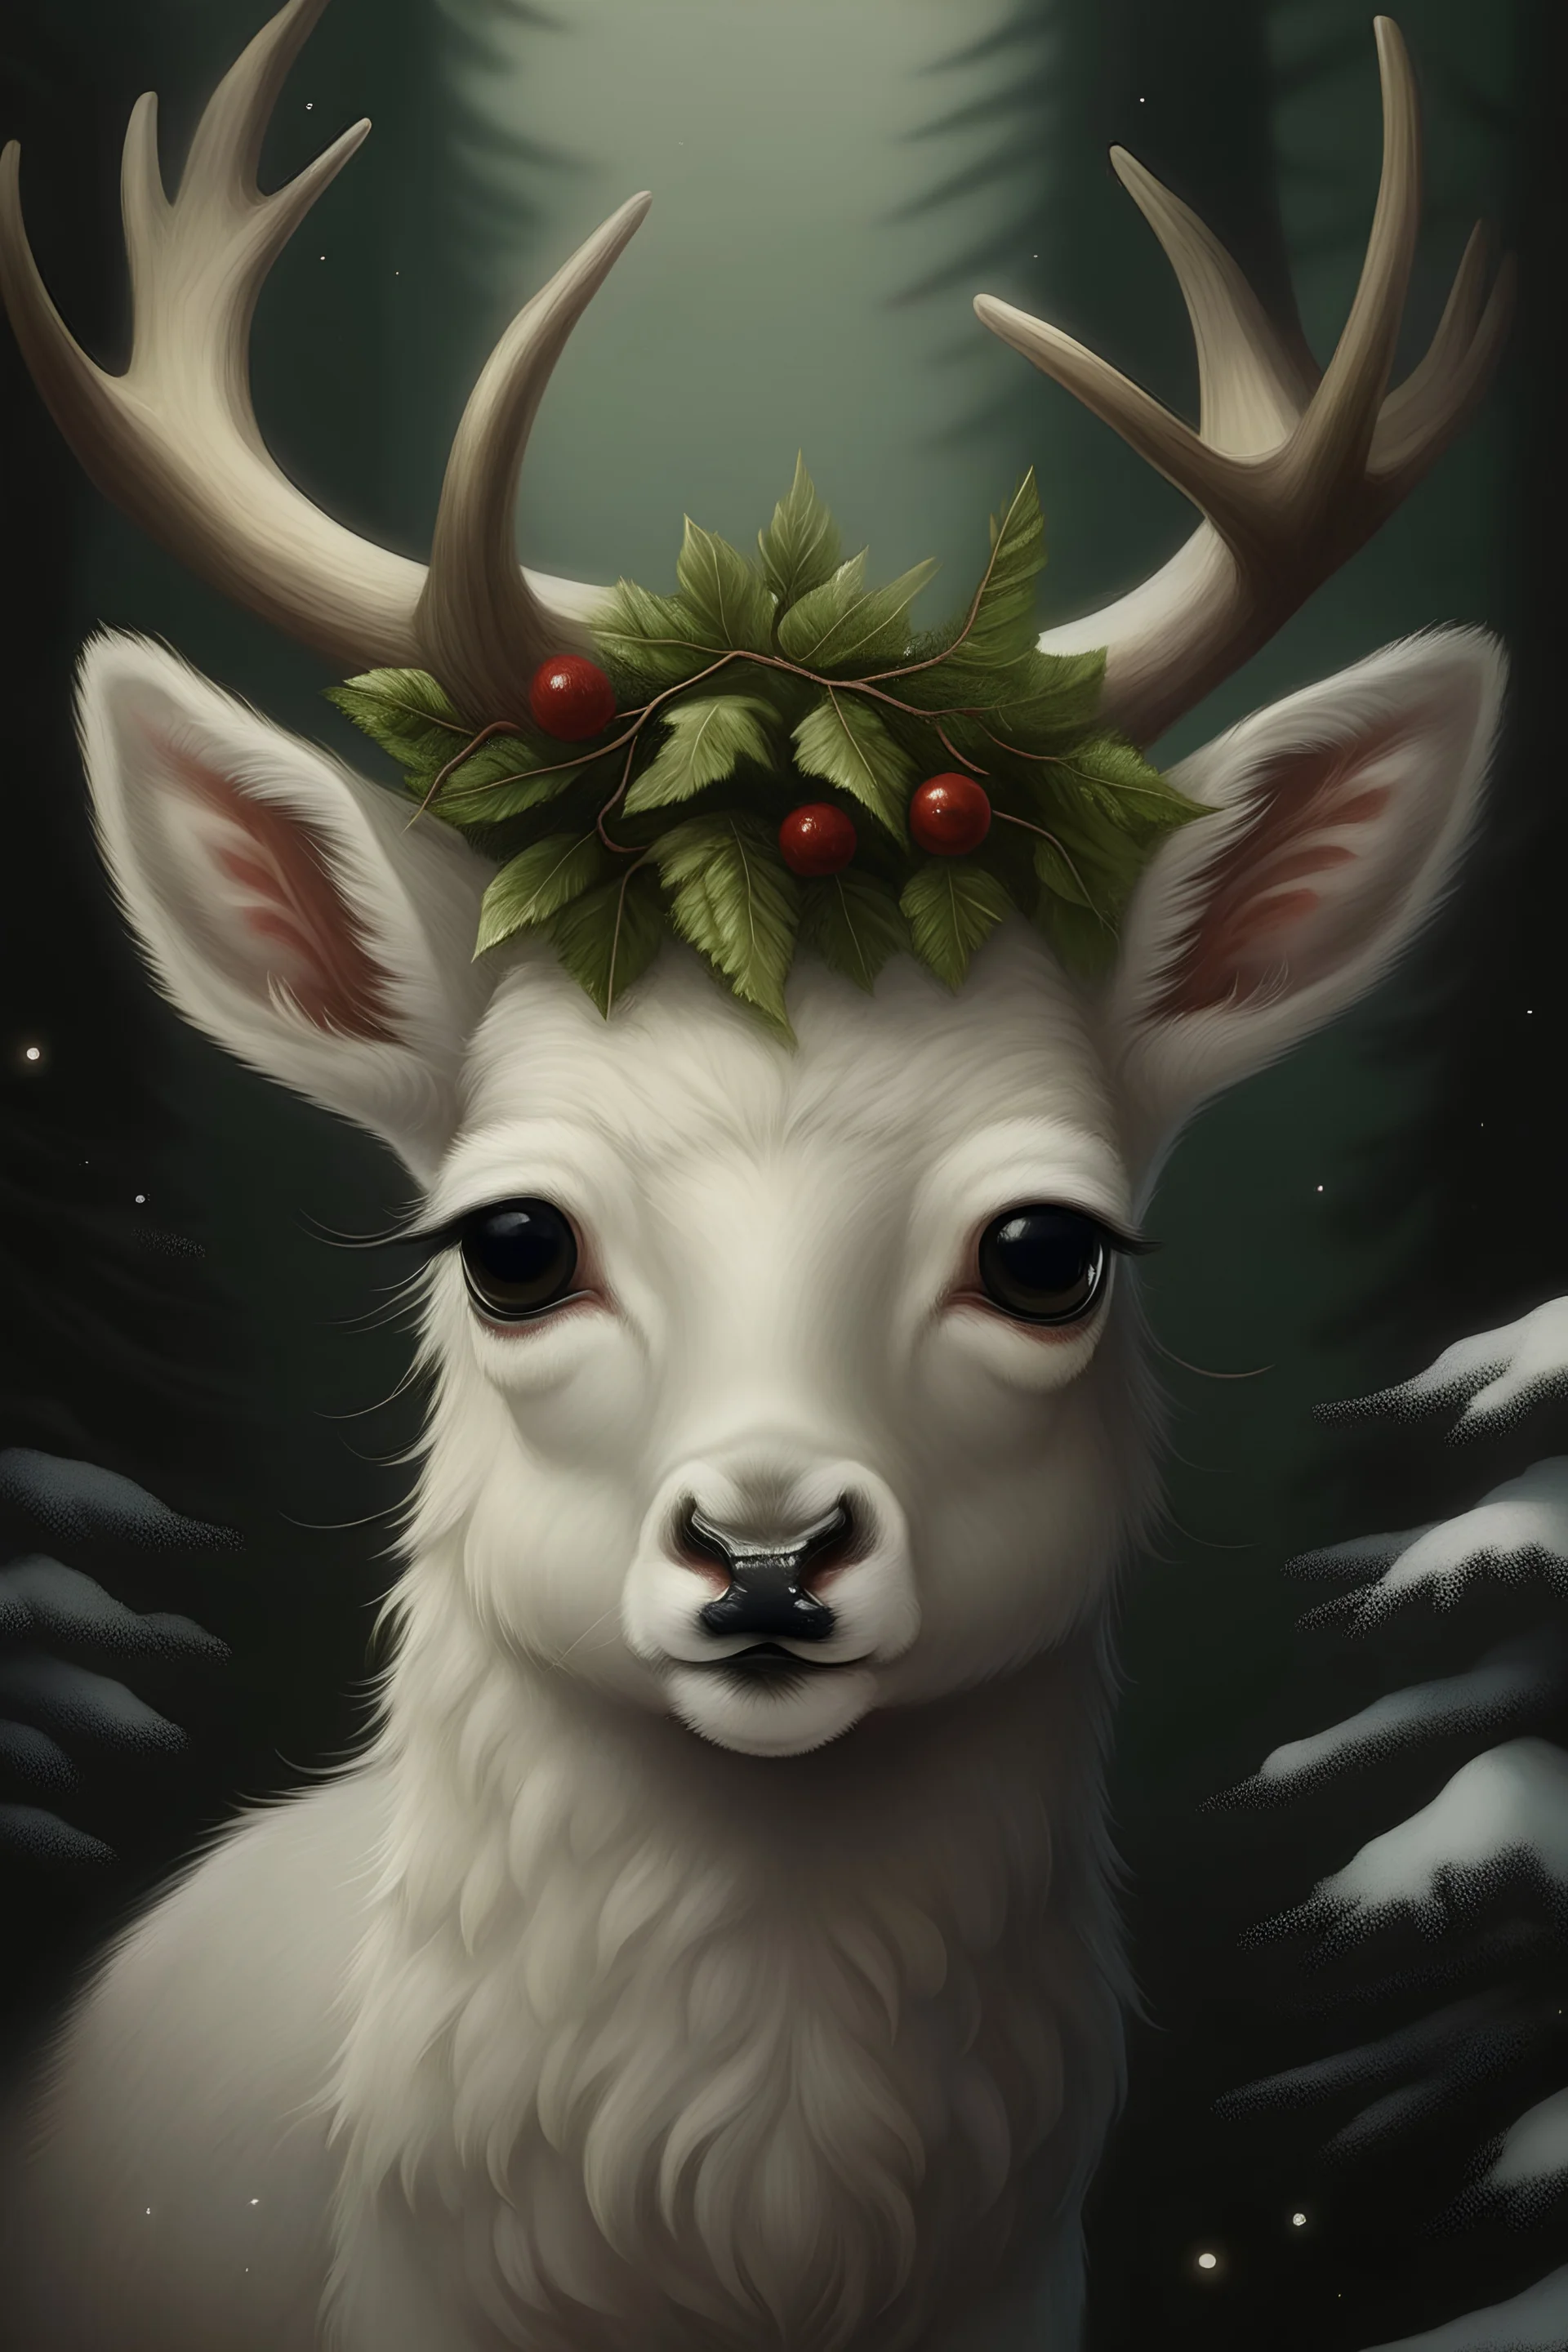 photorealistic; portrait Cute fantasy white Christmas fawn wearing a wreath around neck; big pine trees all around; in the style of Sebastio Salgardo